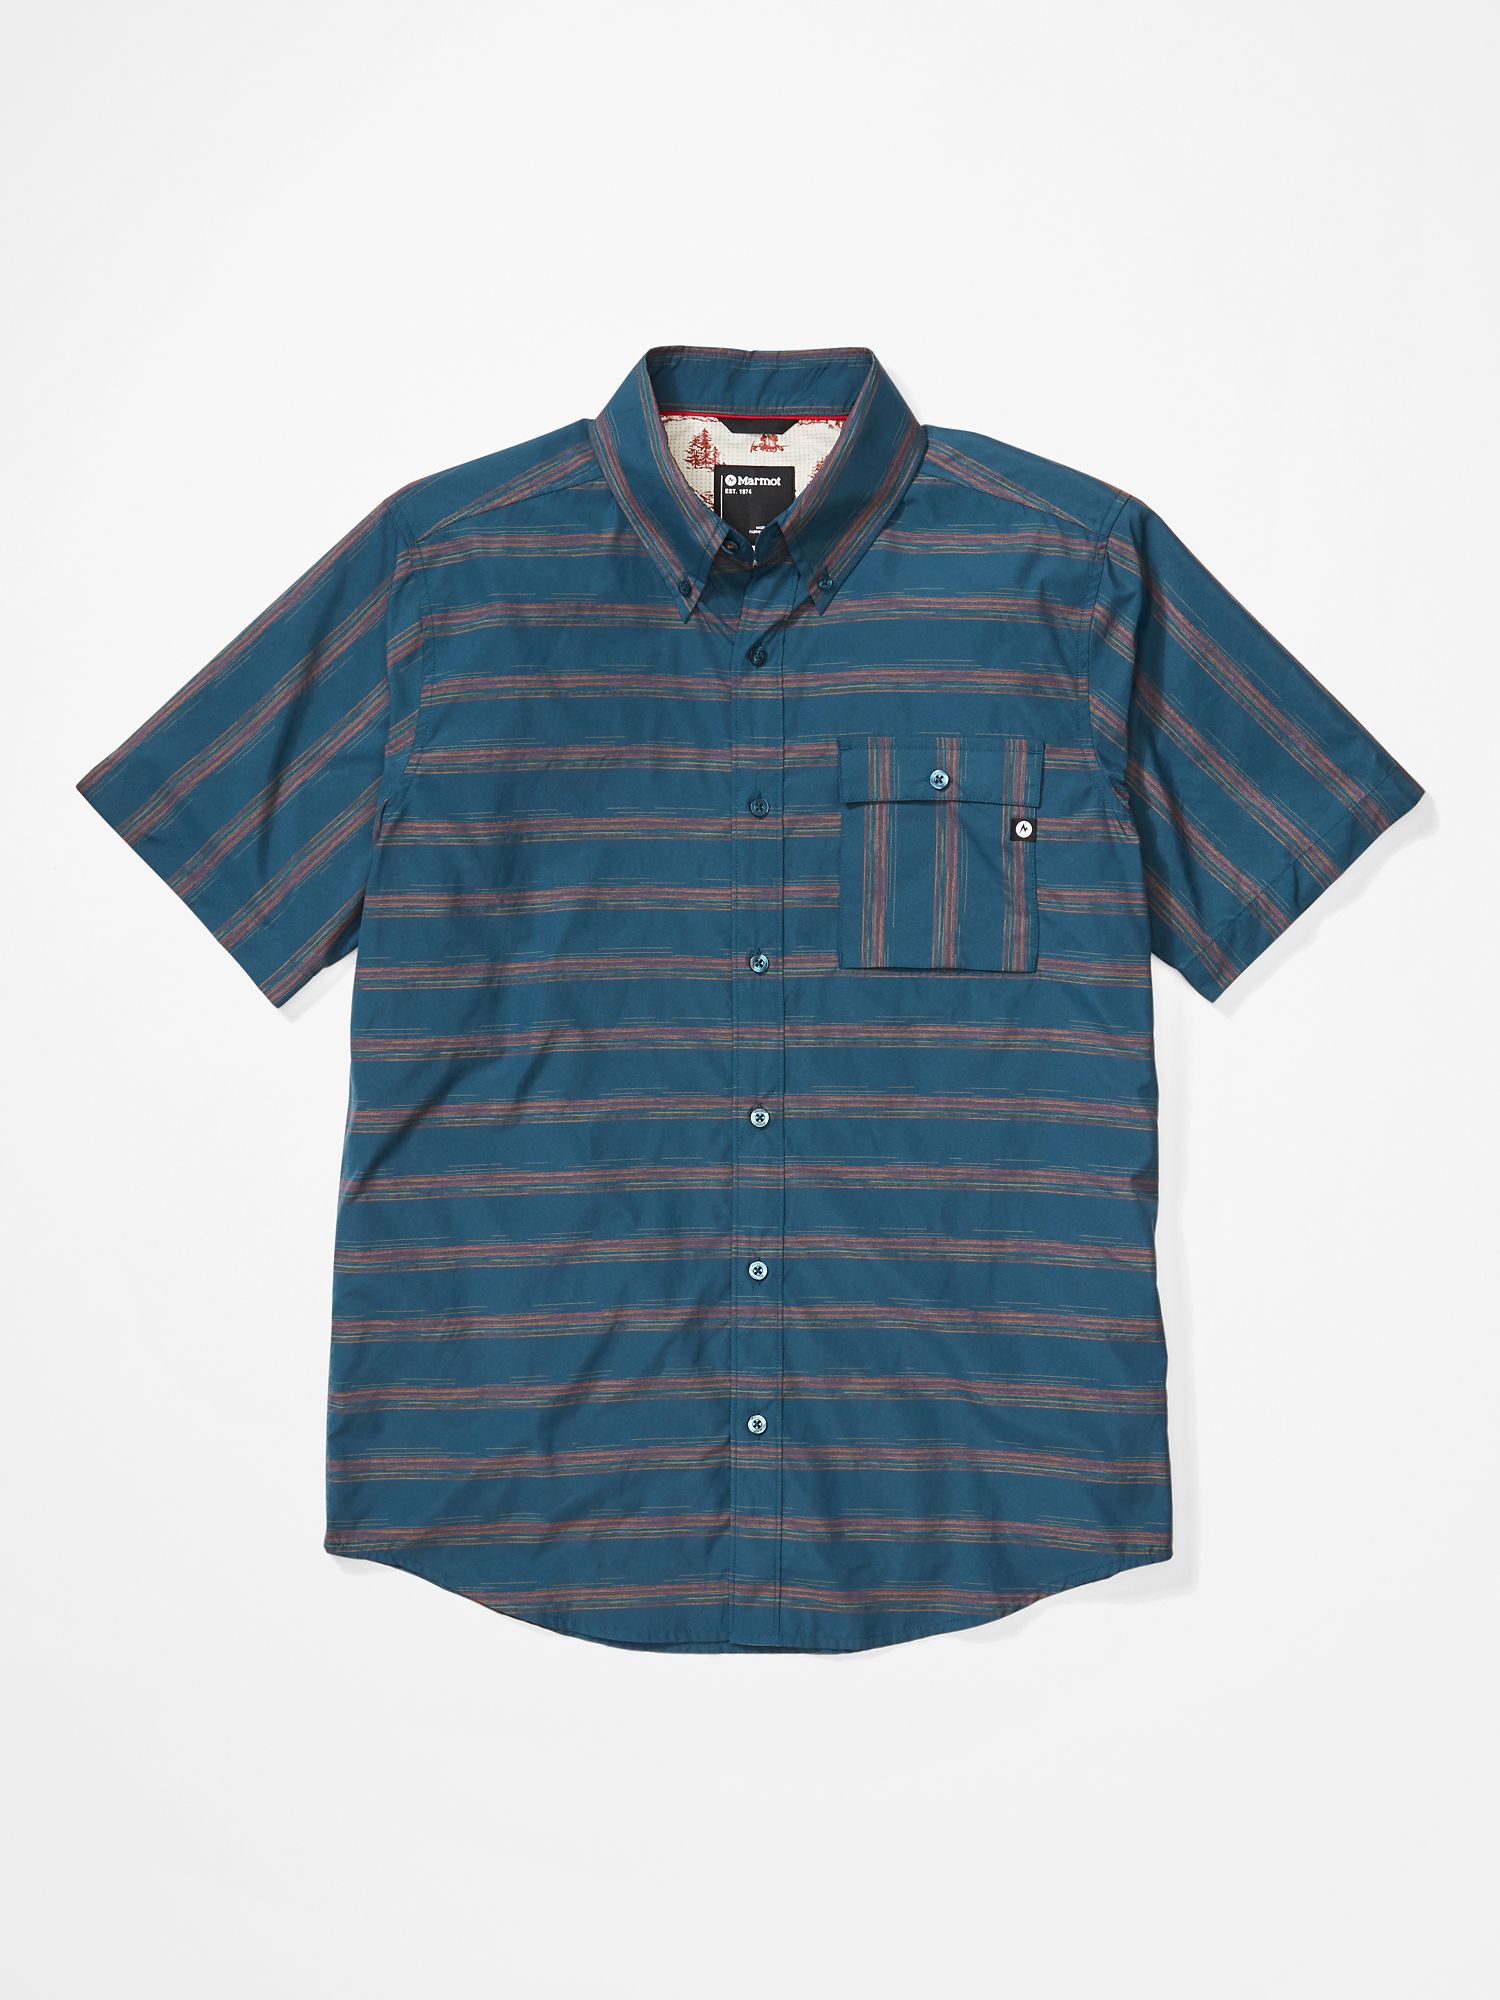 Men's Beacon Hill Short-Sleeve Shirt